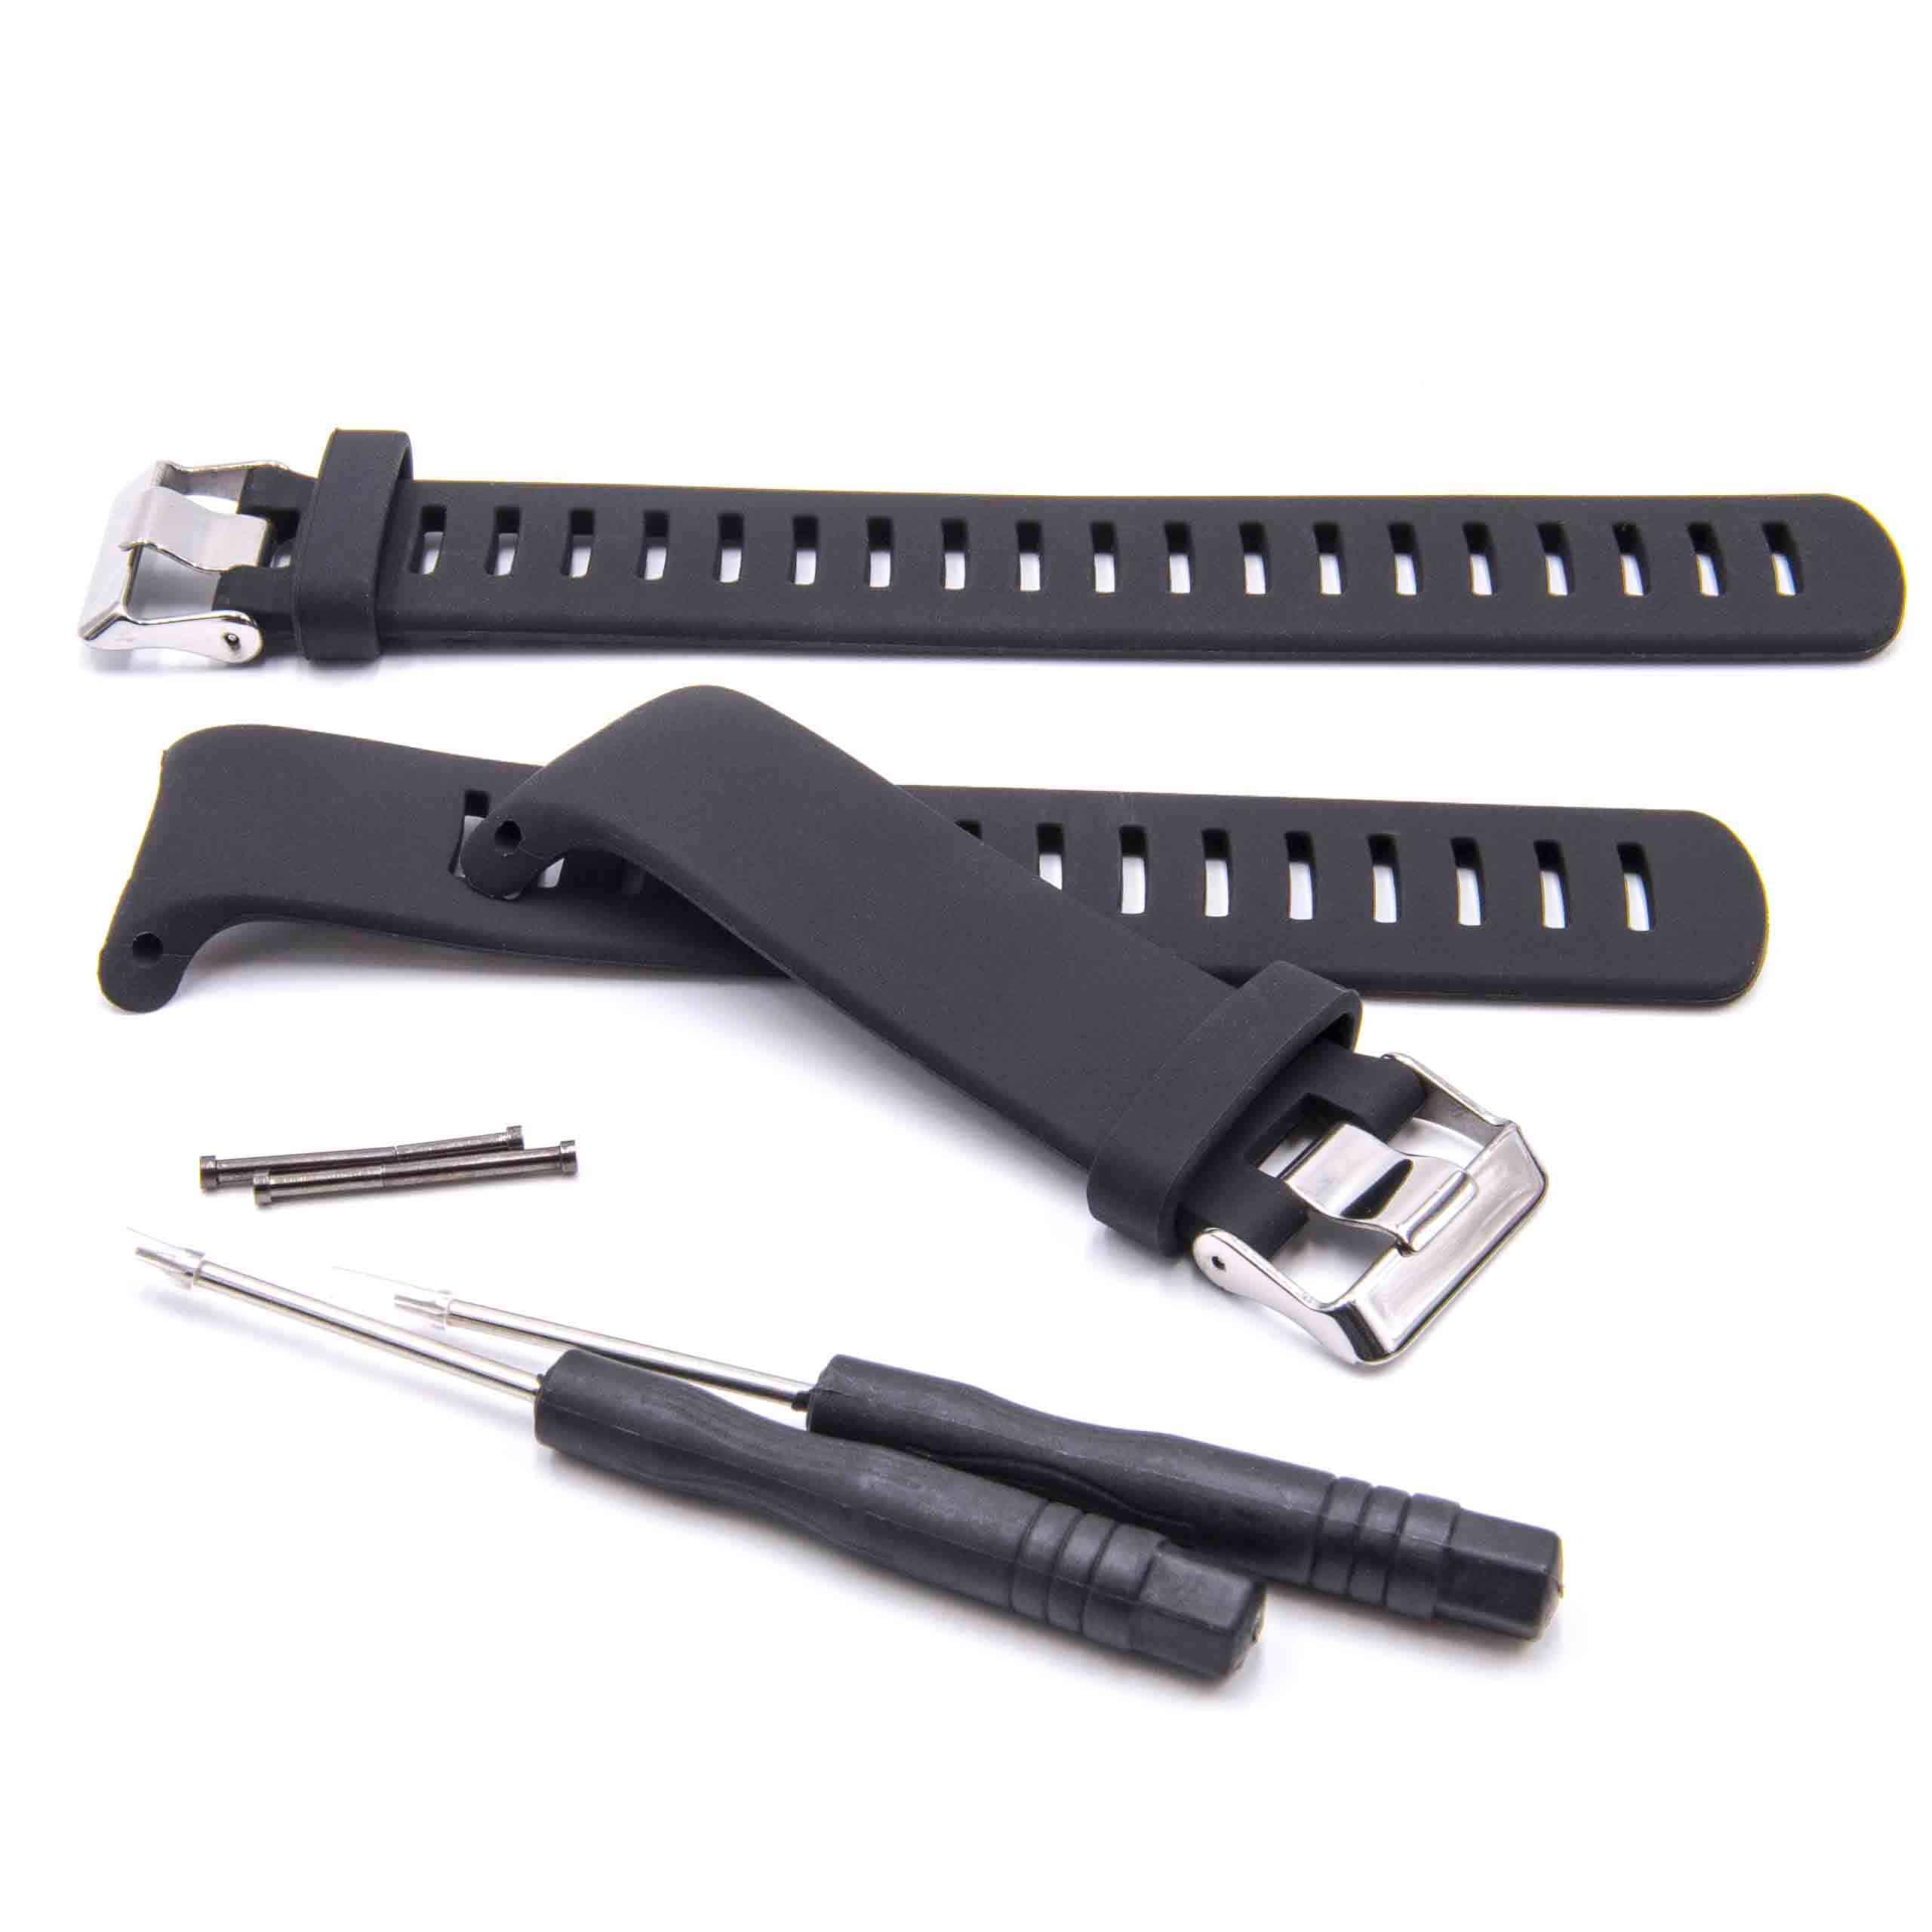 wristband for Suunto Smartwatch - 163cm + 13.2 cm long, 23mm wide, black